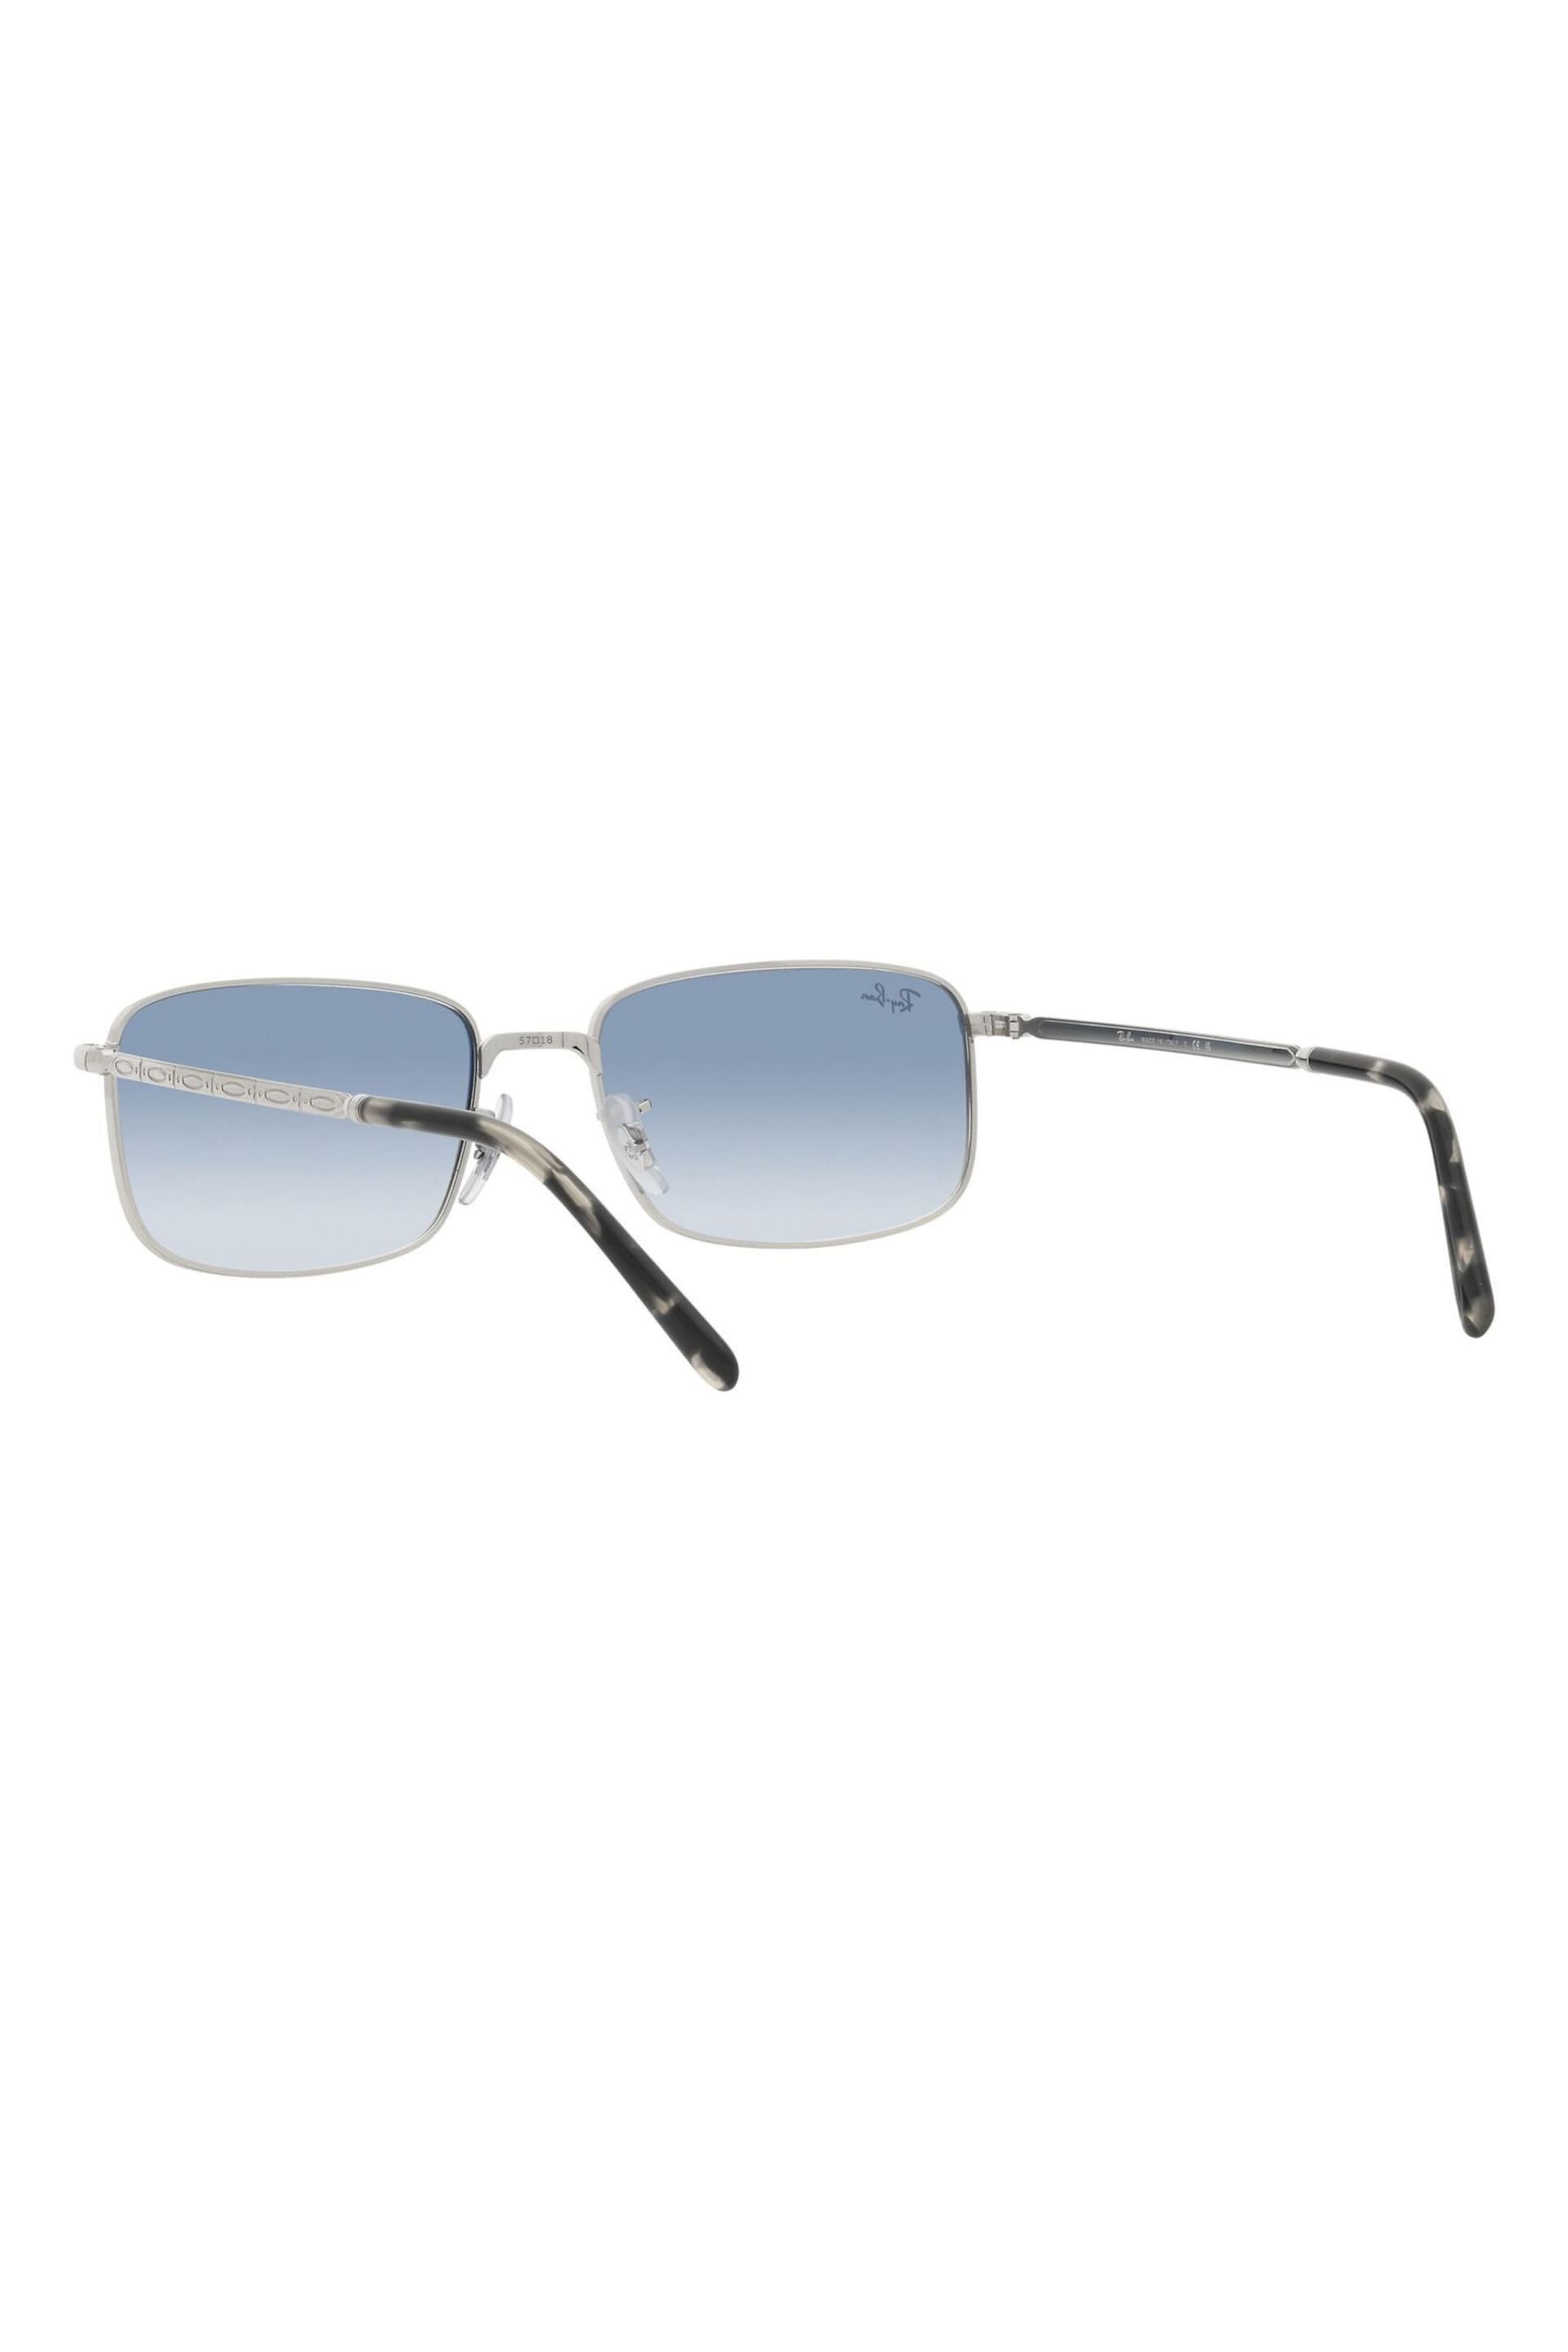 Ray-Ban Silver Sunglasses - Image 2 of 11